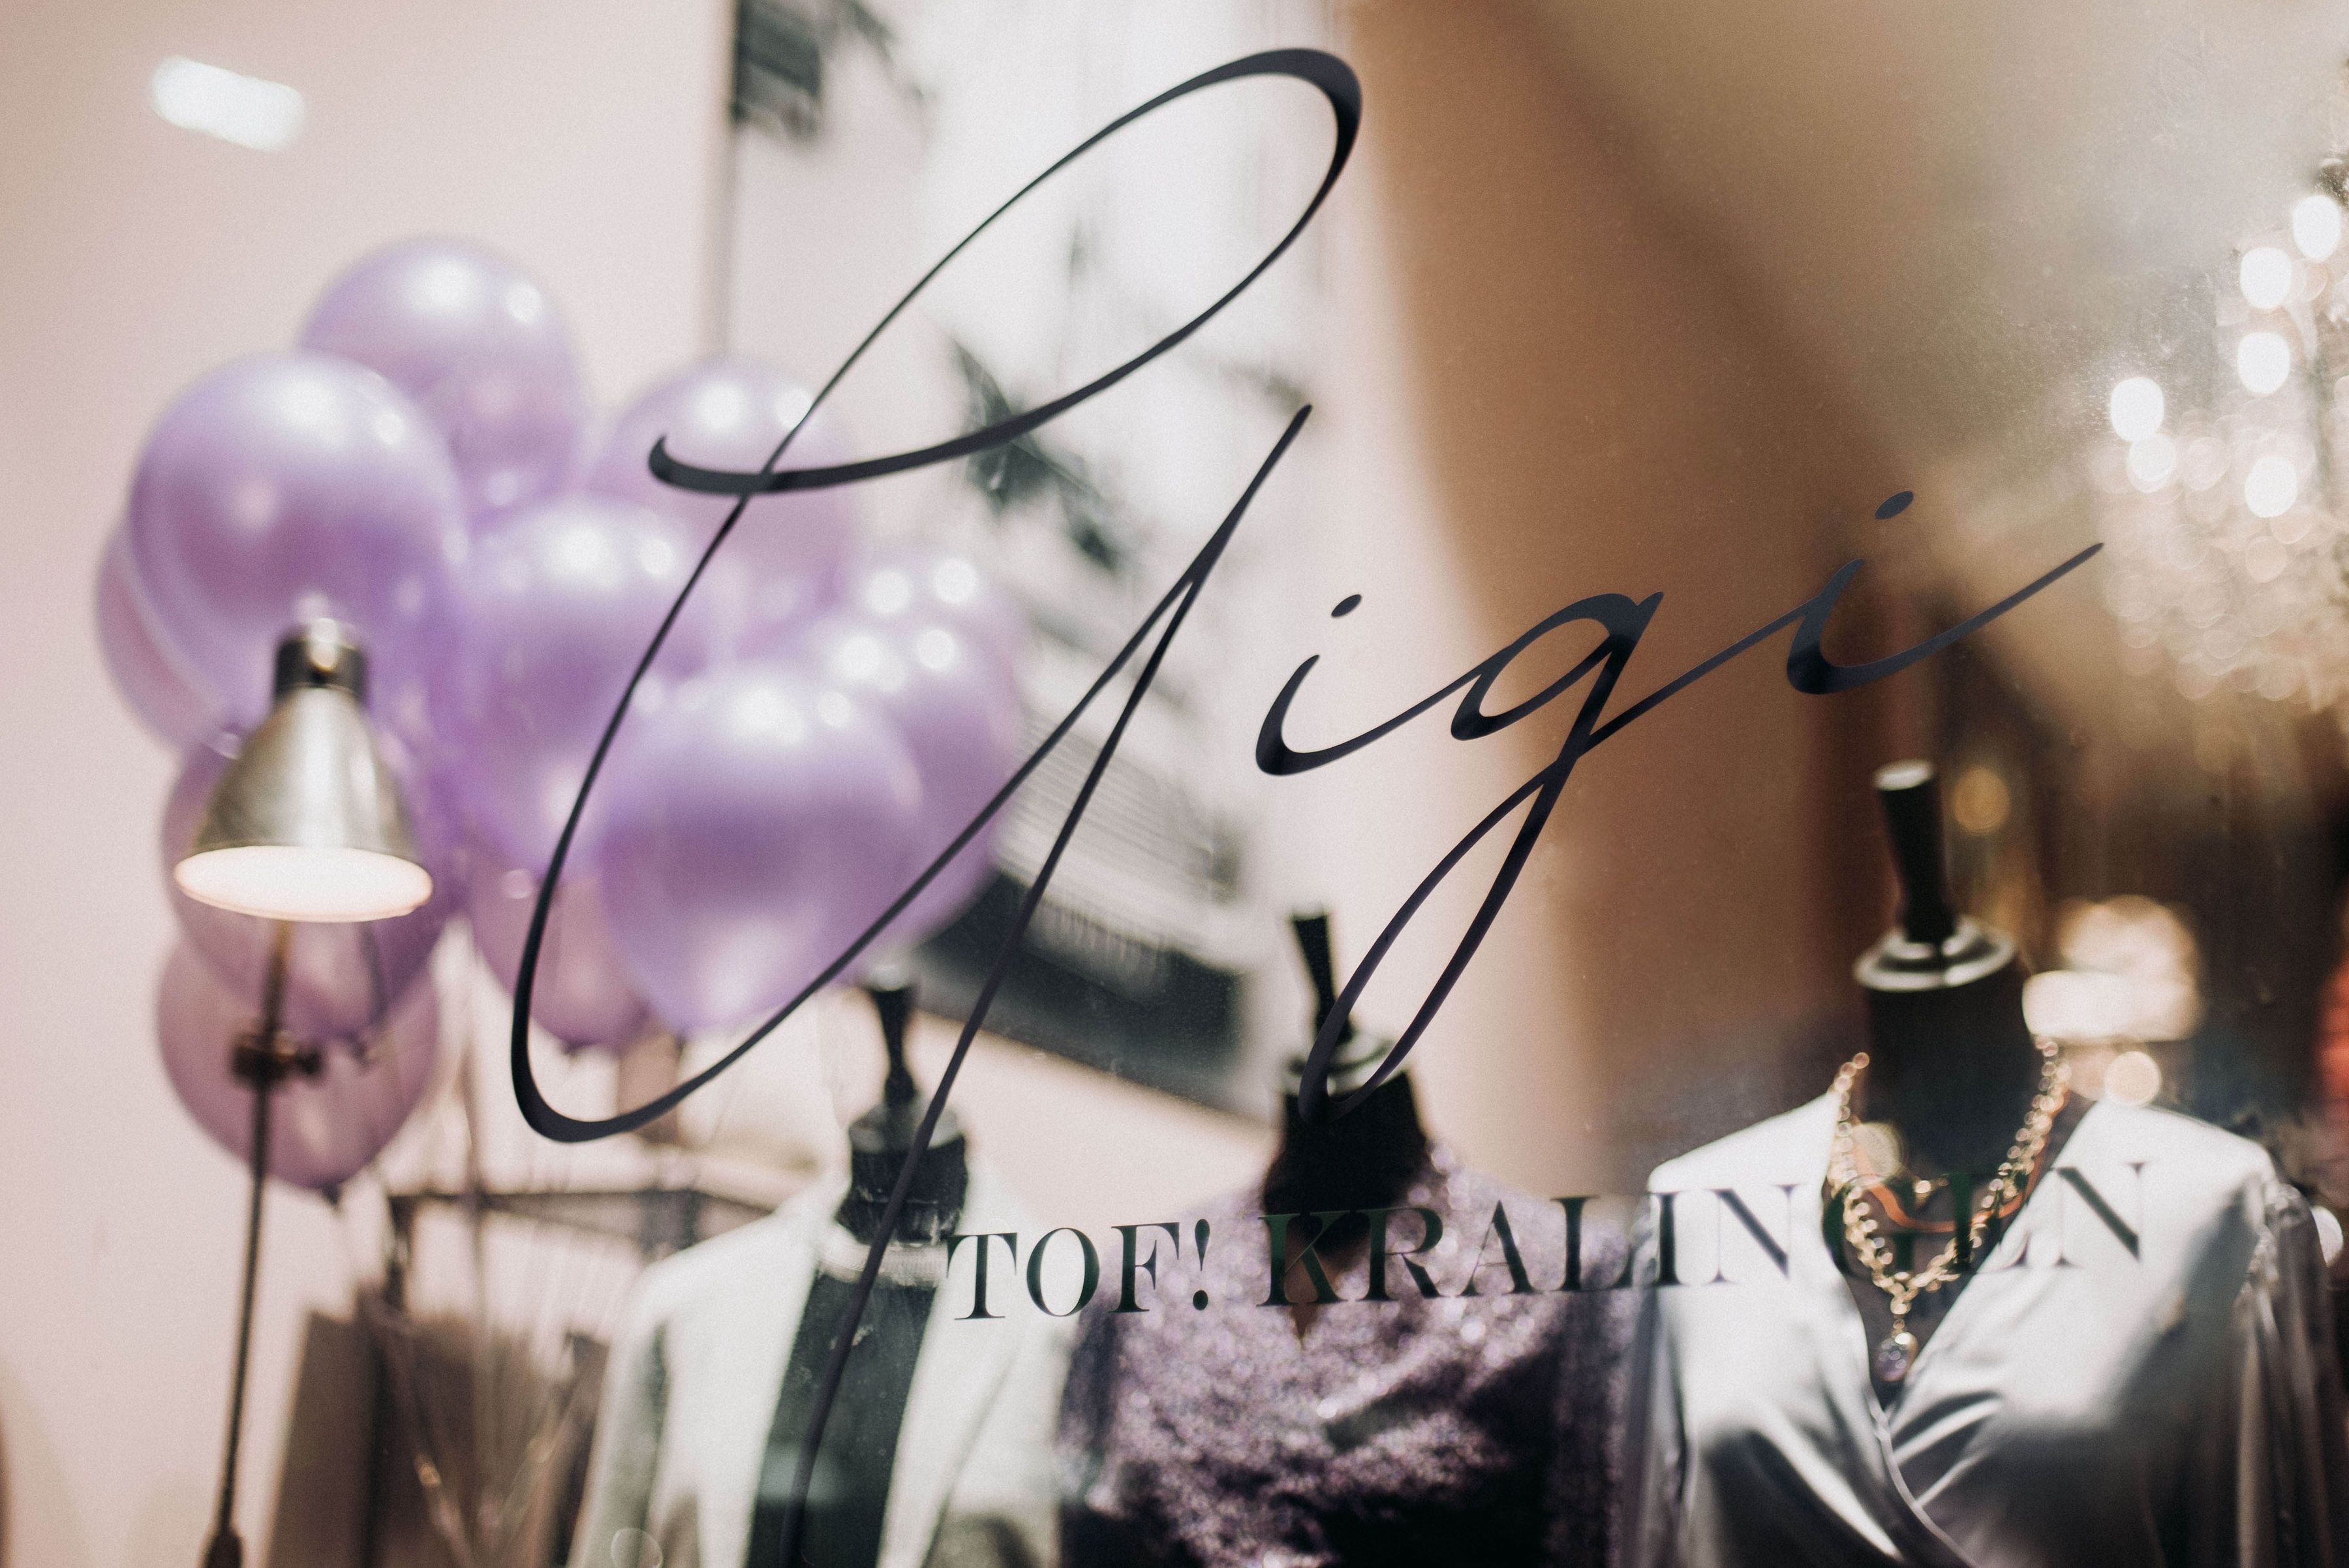 Ballonnen in boutique Gigi TOF! Kralingen